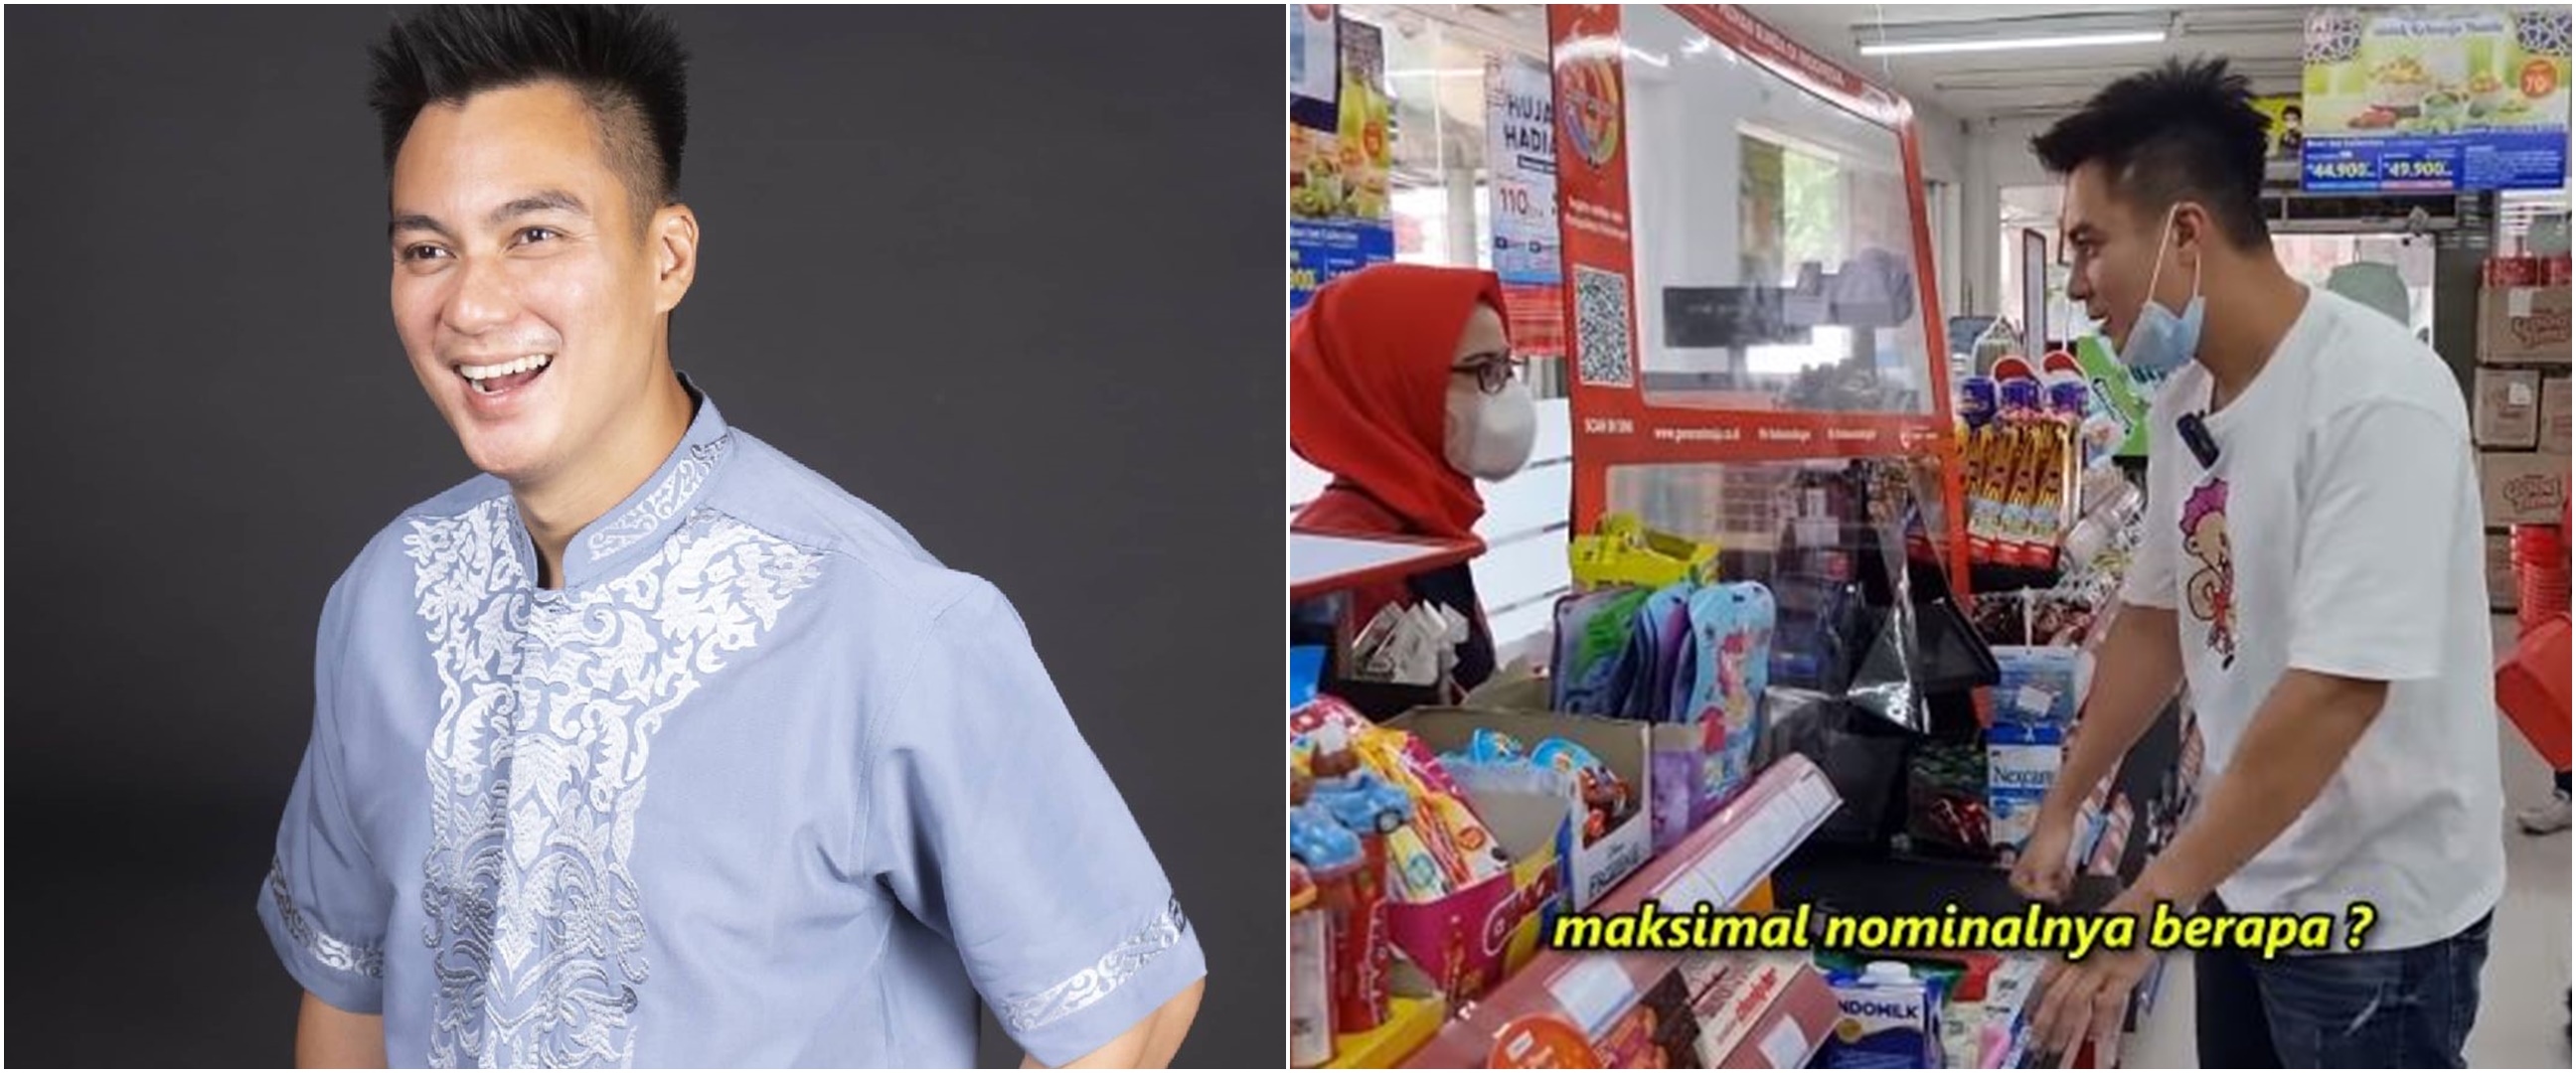 10 Momen Baim Wong borong di minimarket, semua pengunjung dibayarin